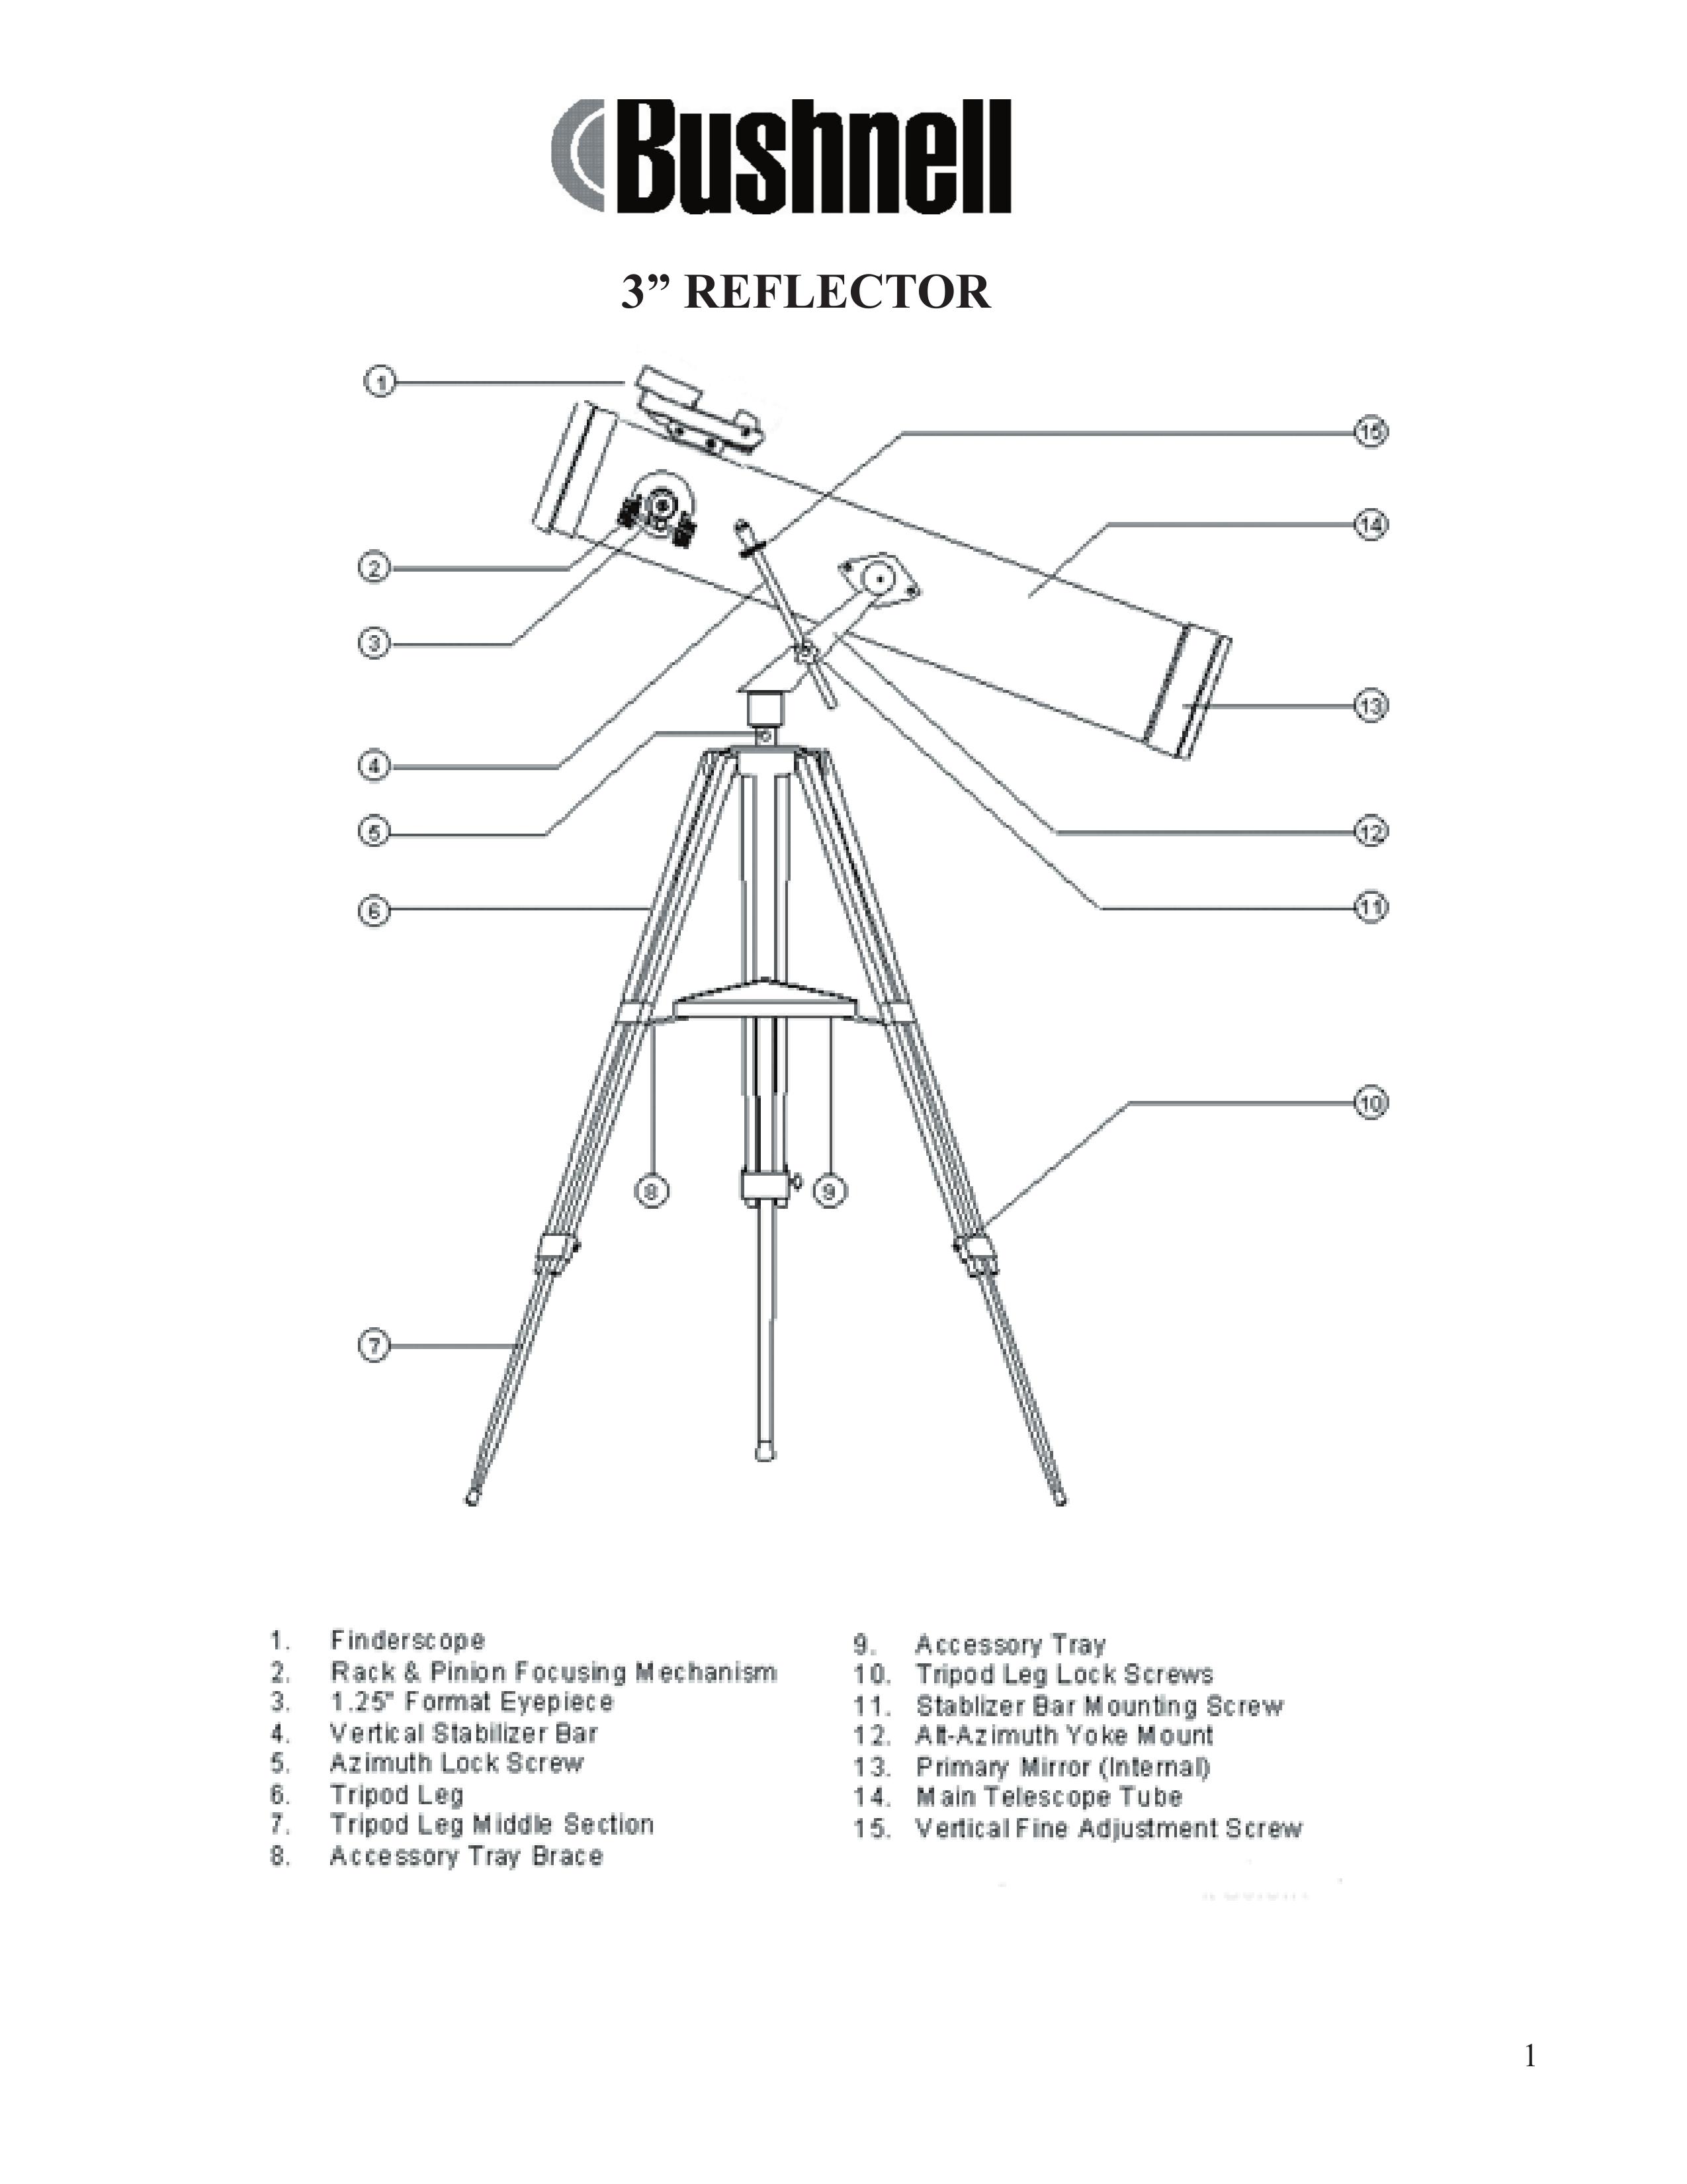 Bushnell 3" REFLECTOR Telescope User Manual